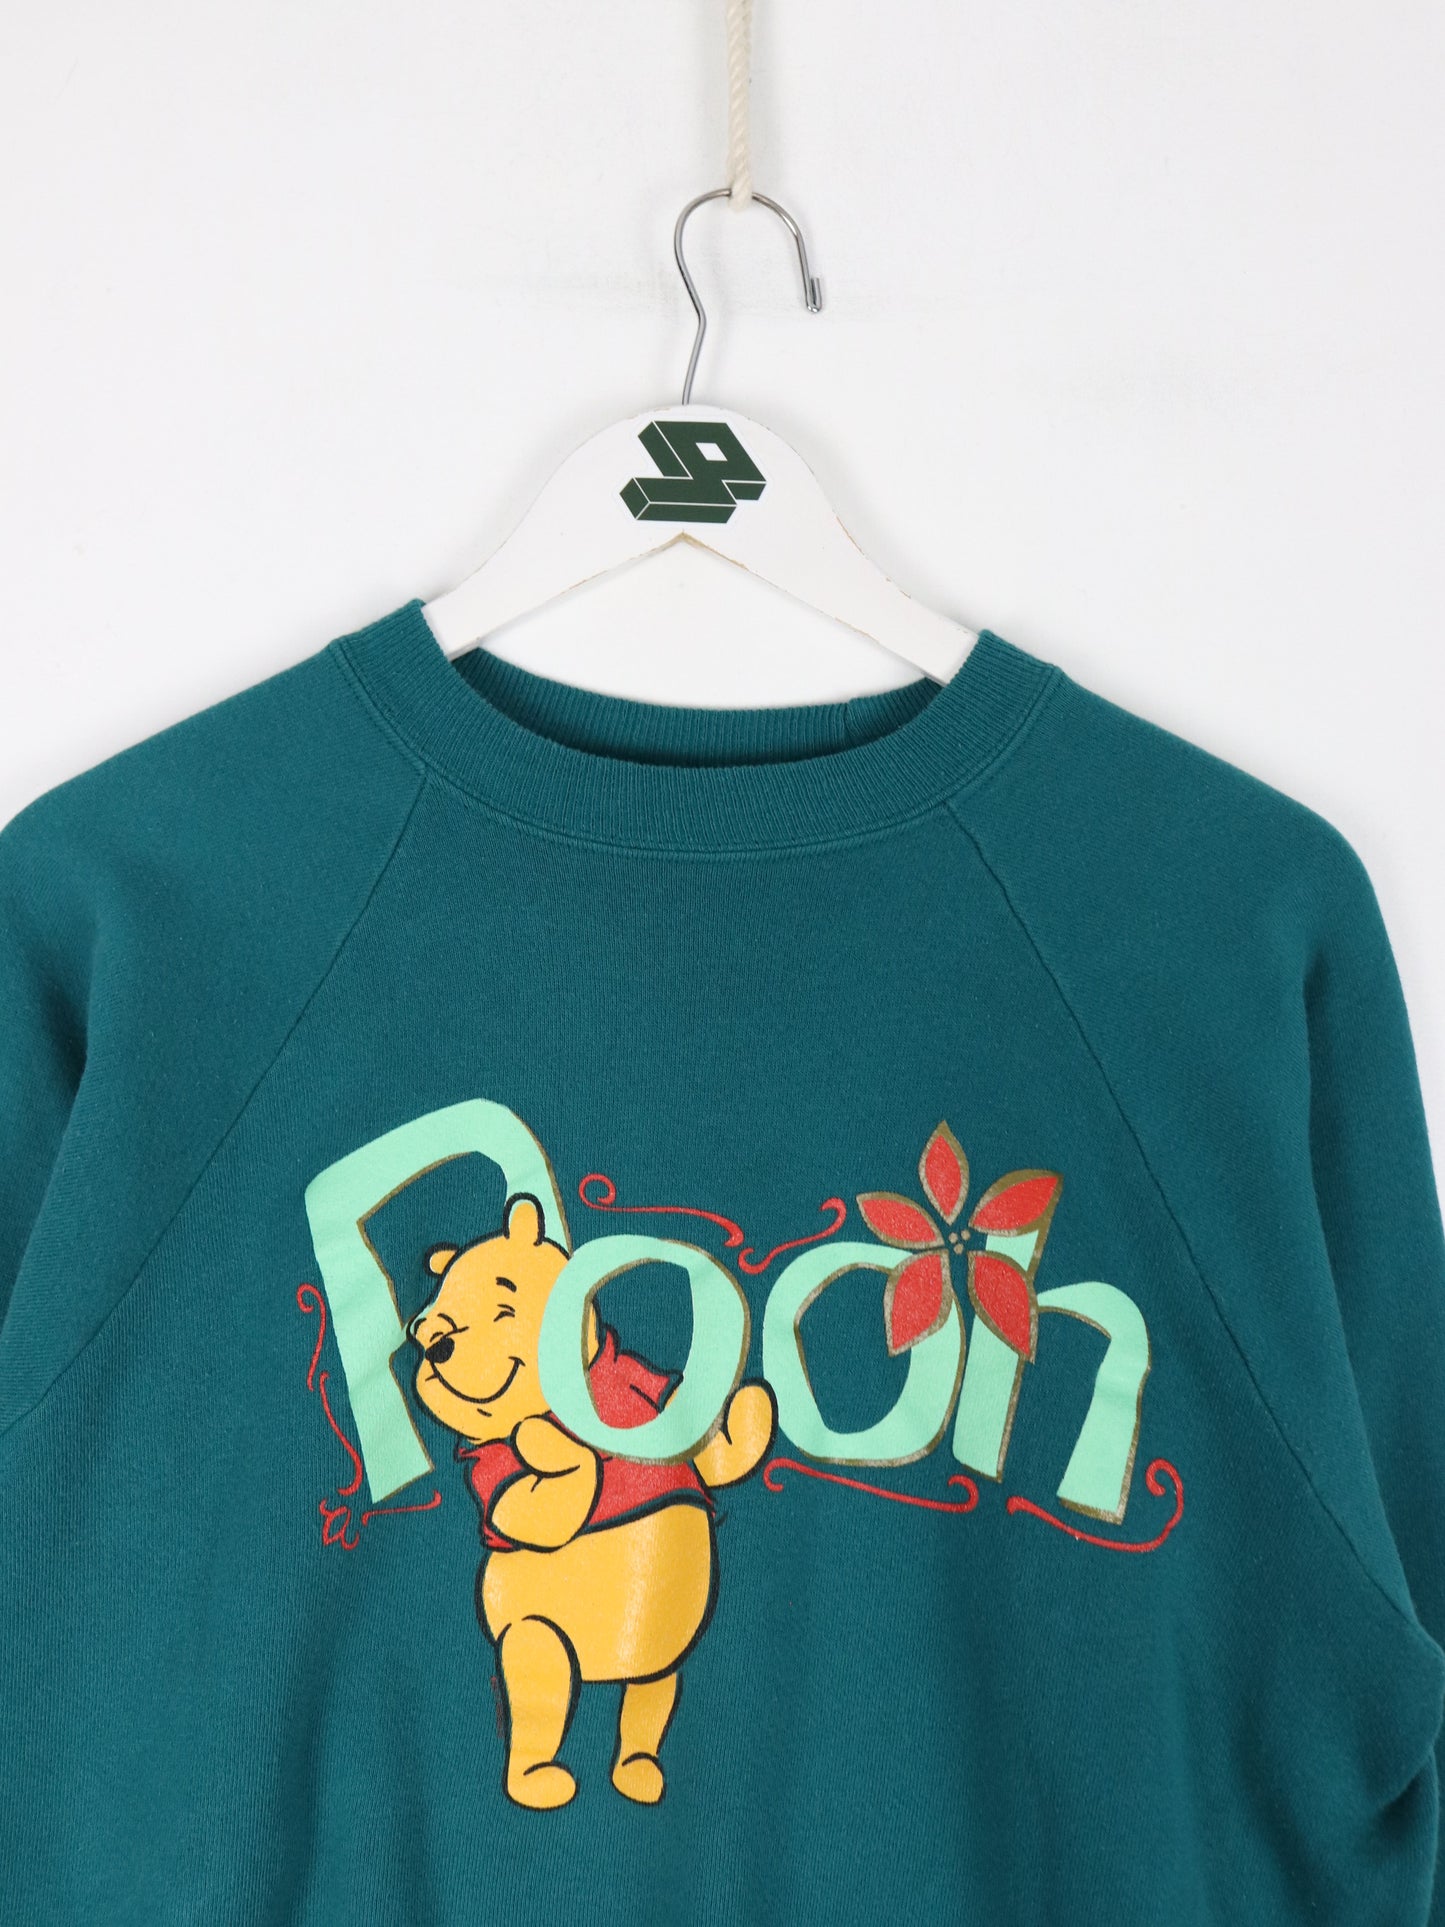 Vintage Disney Sweatshirt Womens Large Green Turquoise Pooh 90s